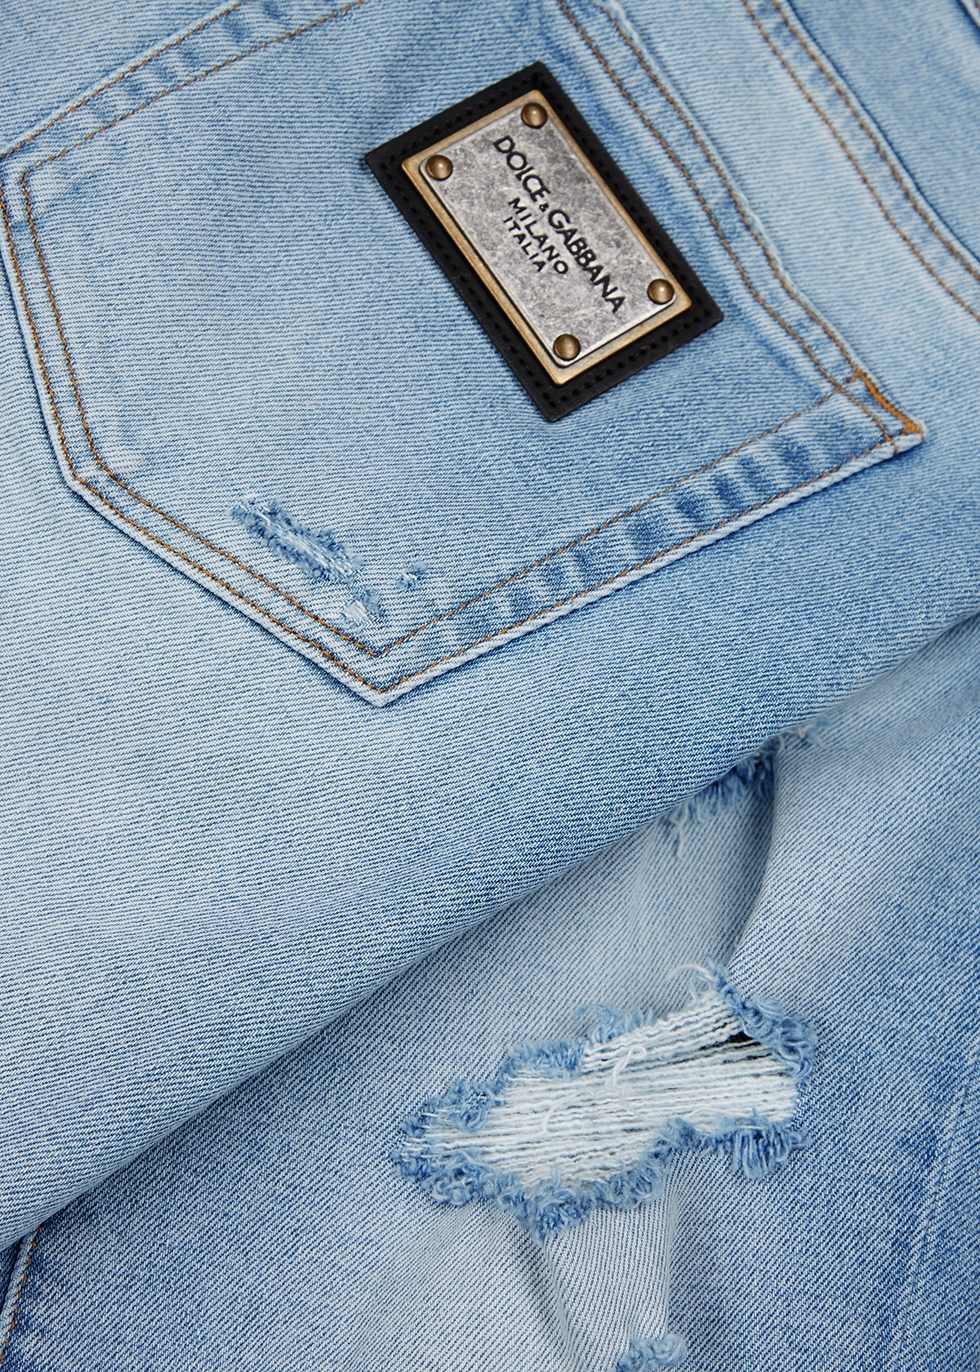 Dolce & Gabbana Light blue distressed skinny jeans - Harvey Nichols